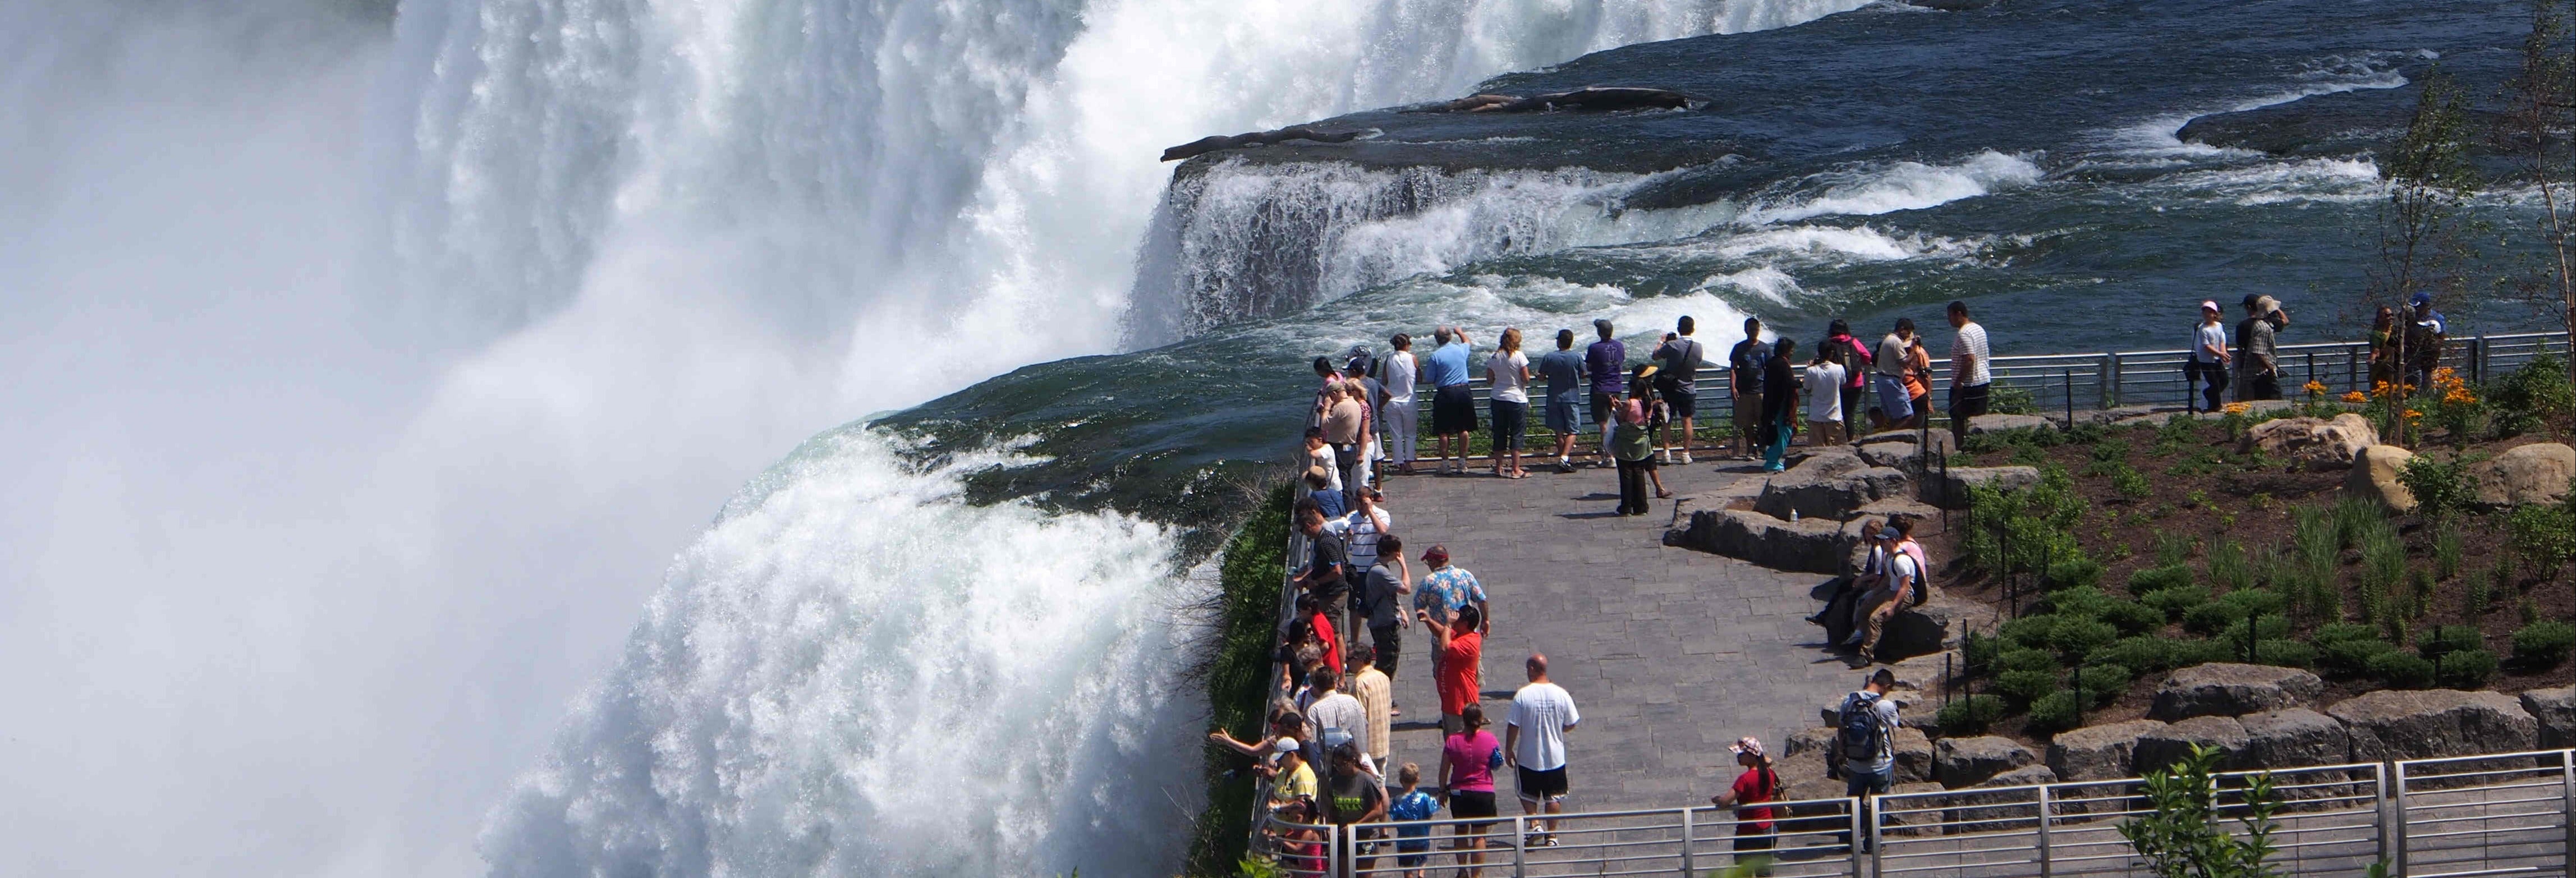 Niagara Falls Tour + Cave of the Winds Ticket